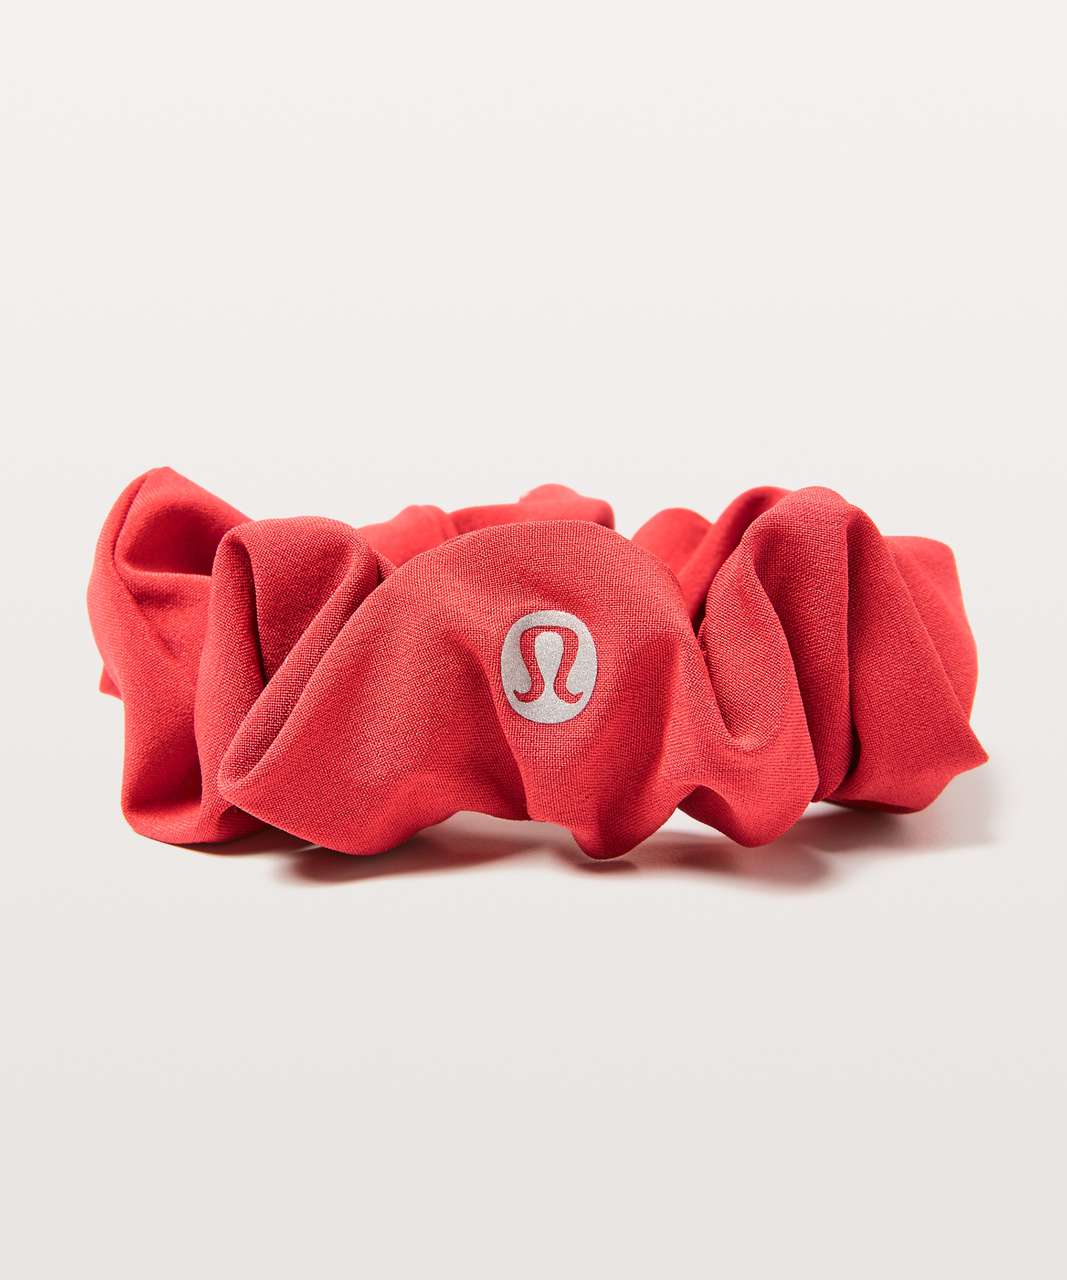 Lululemon Uplifting Scrunchie - Persian Red